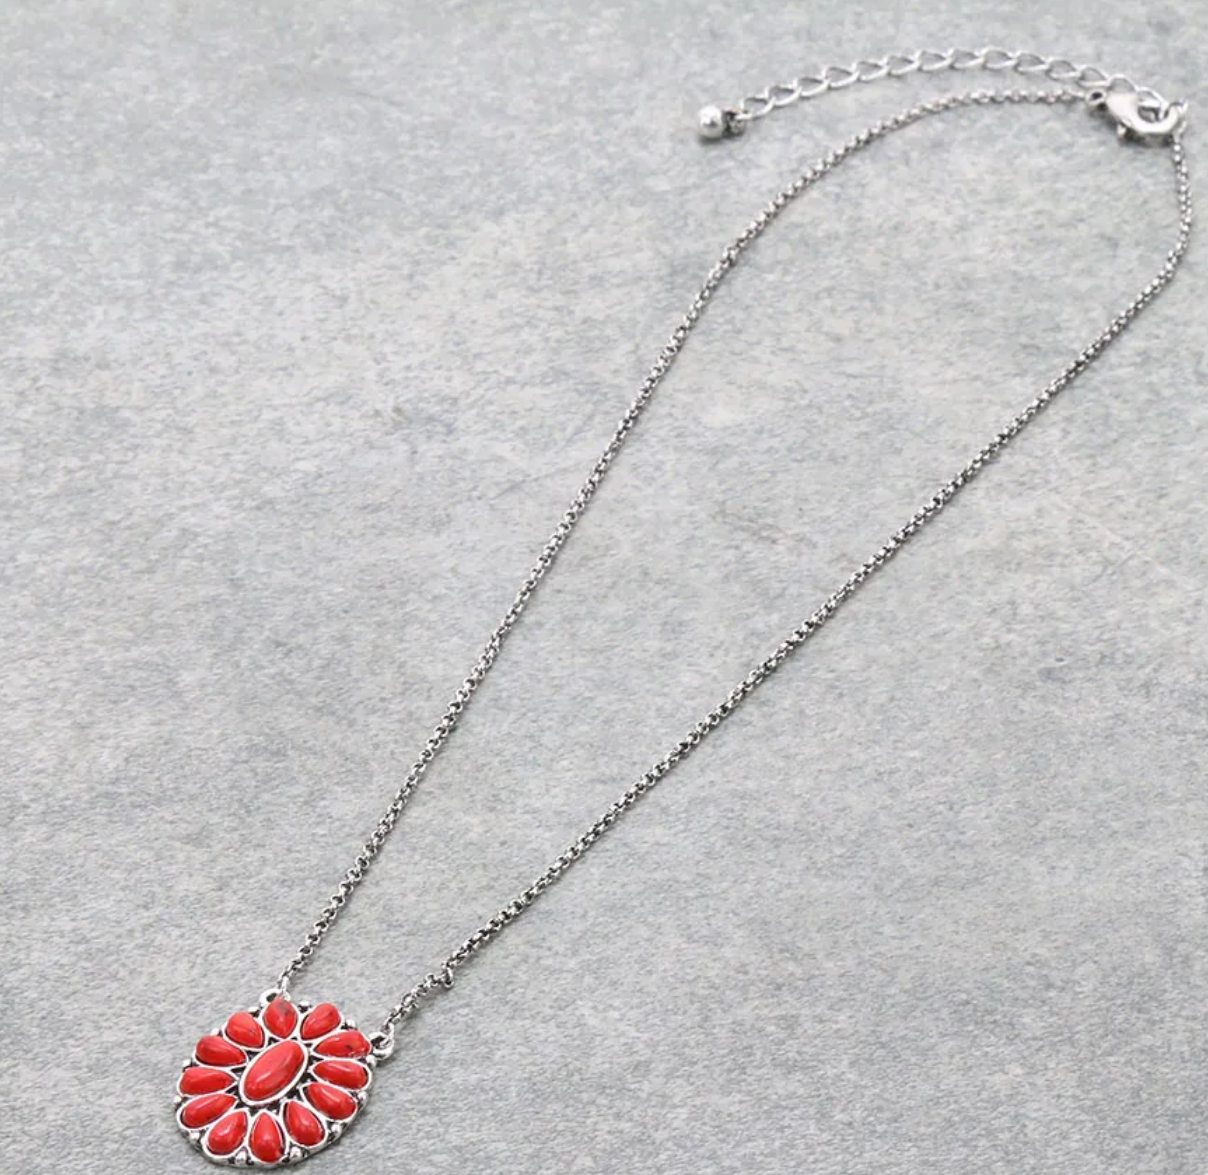 Western Concho Pendant Chain Necklace